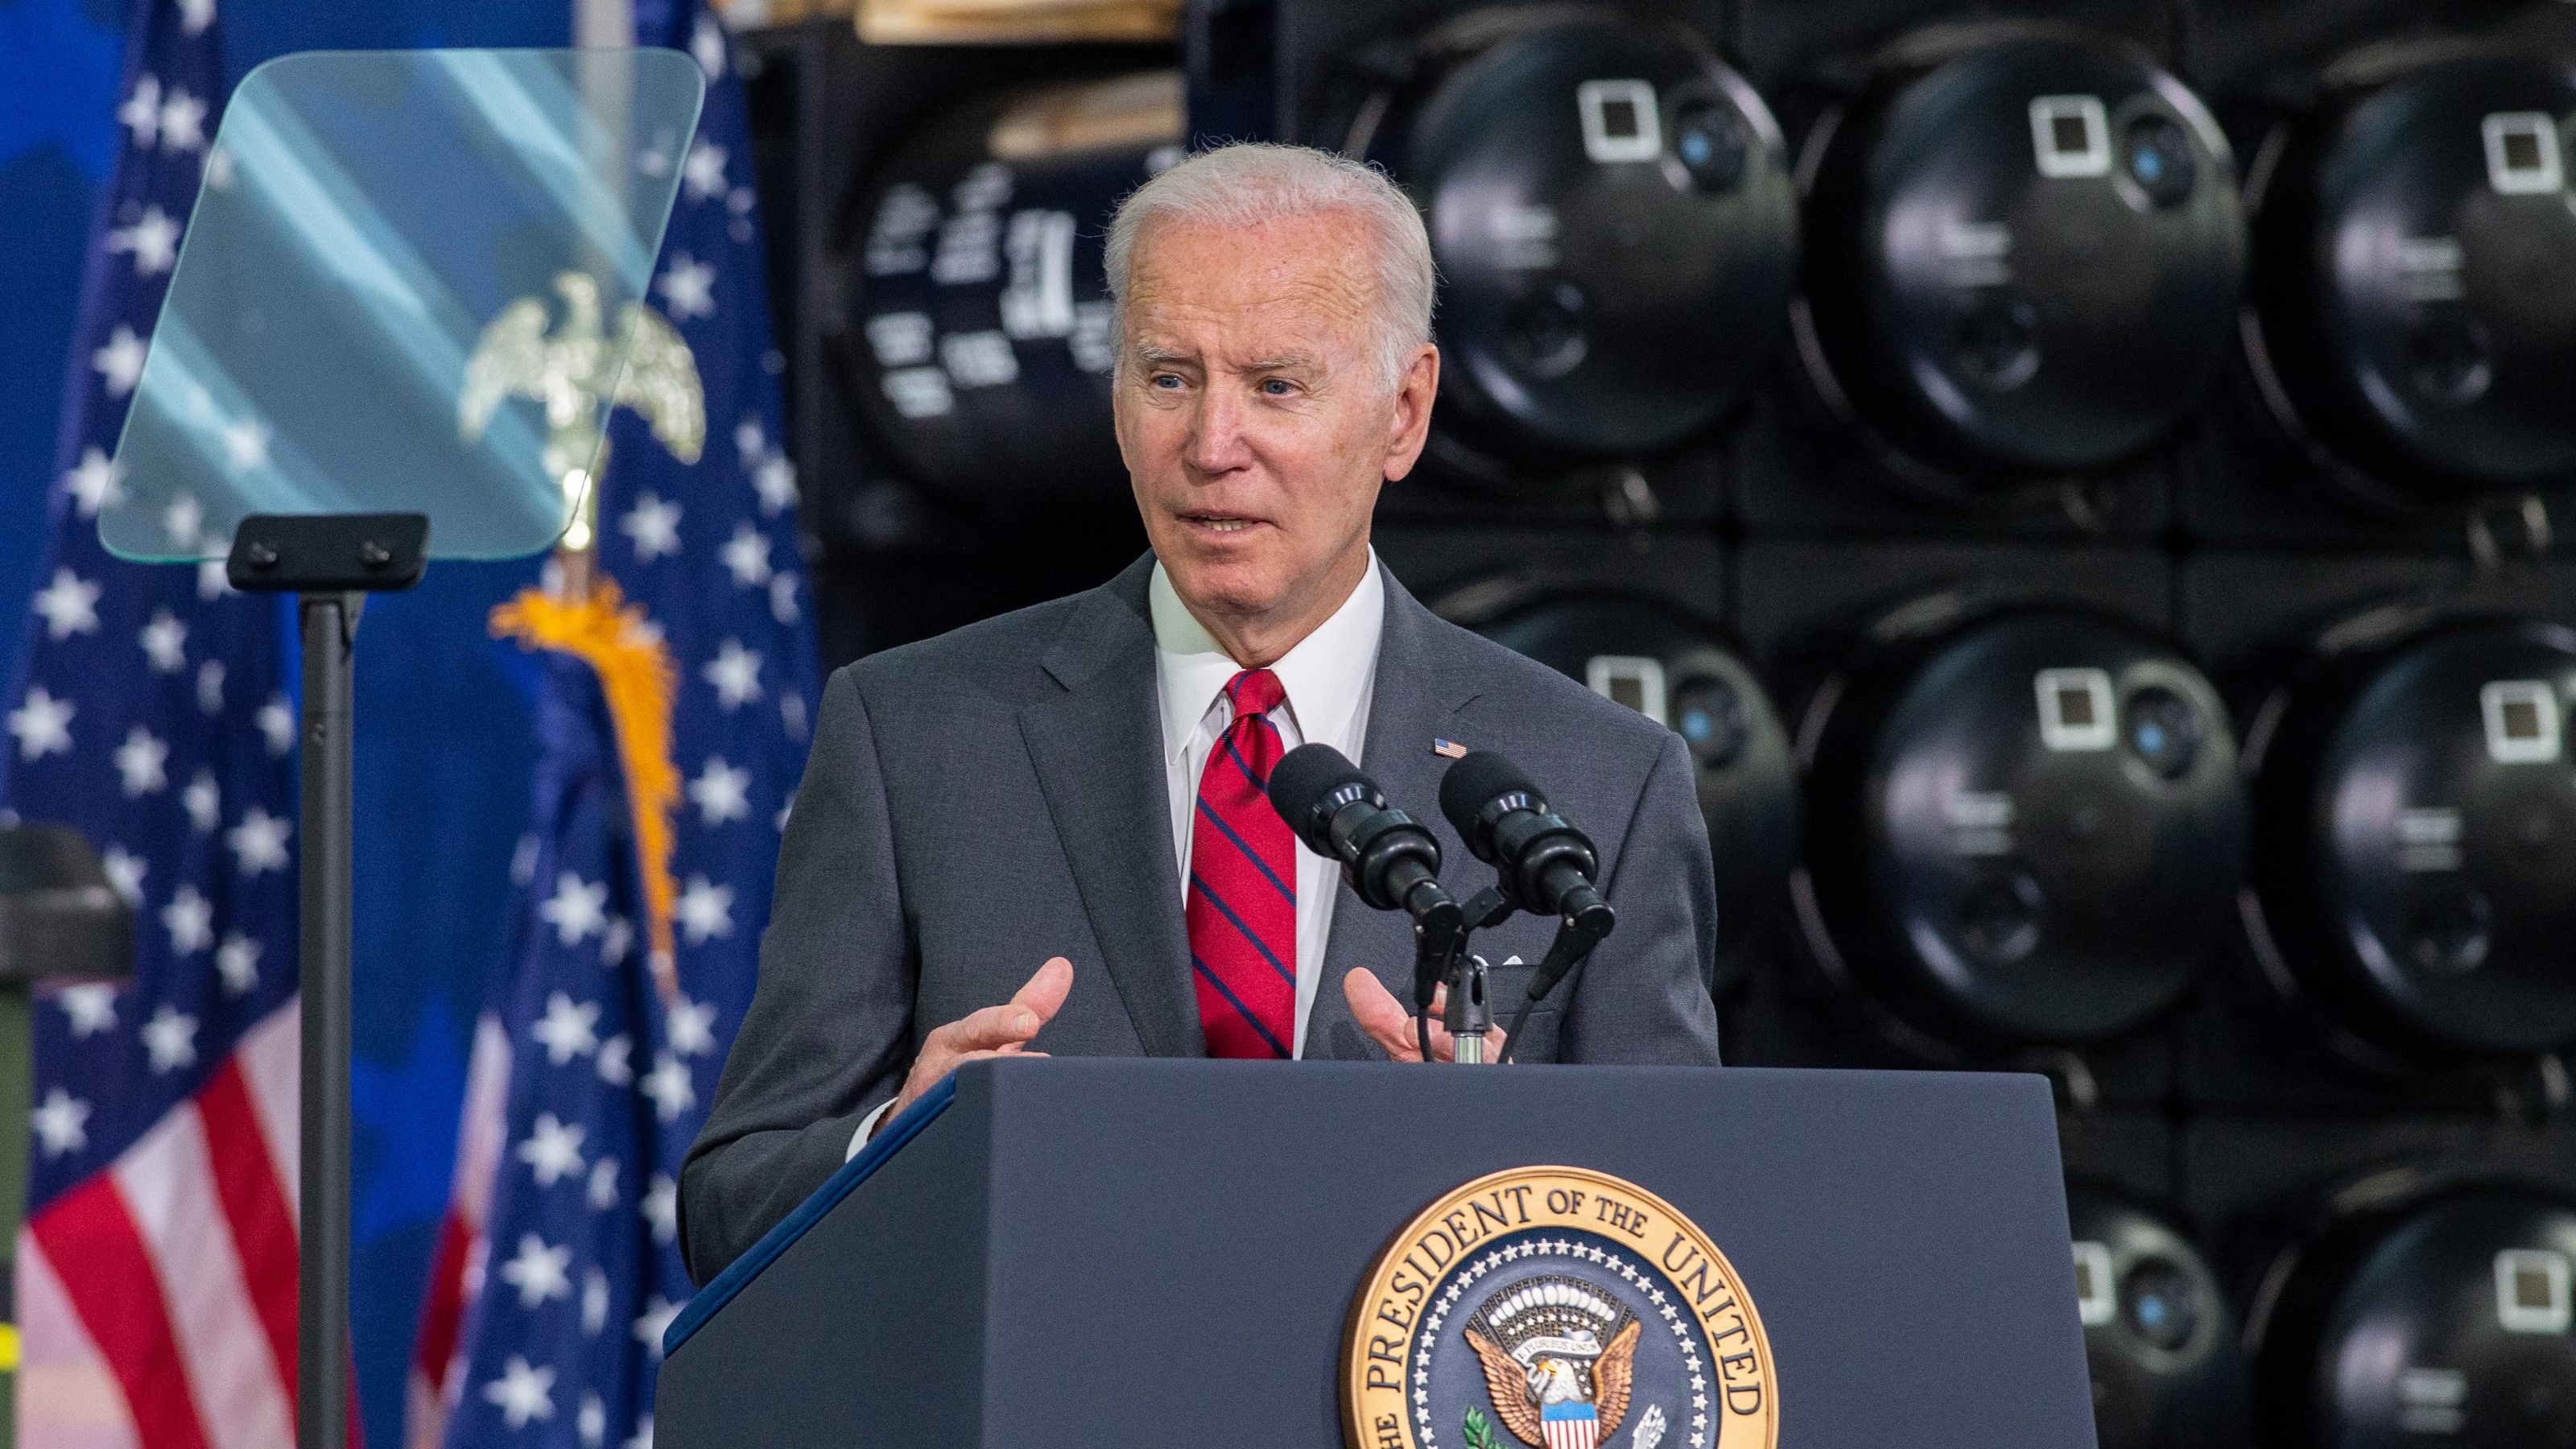 Joe Biden addresses reporters at a Lockheed Martin factory in Troy, Alabama